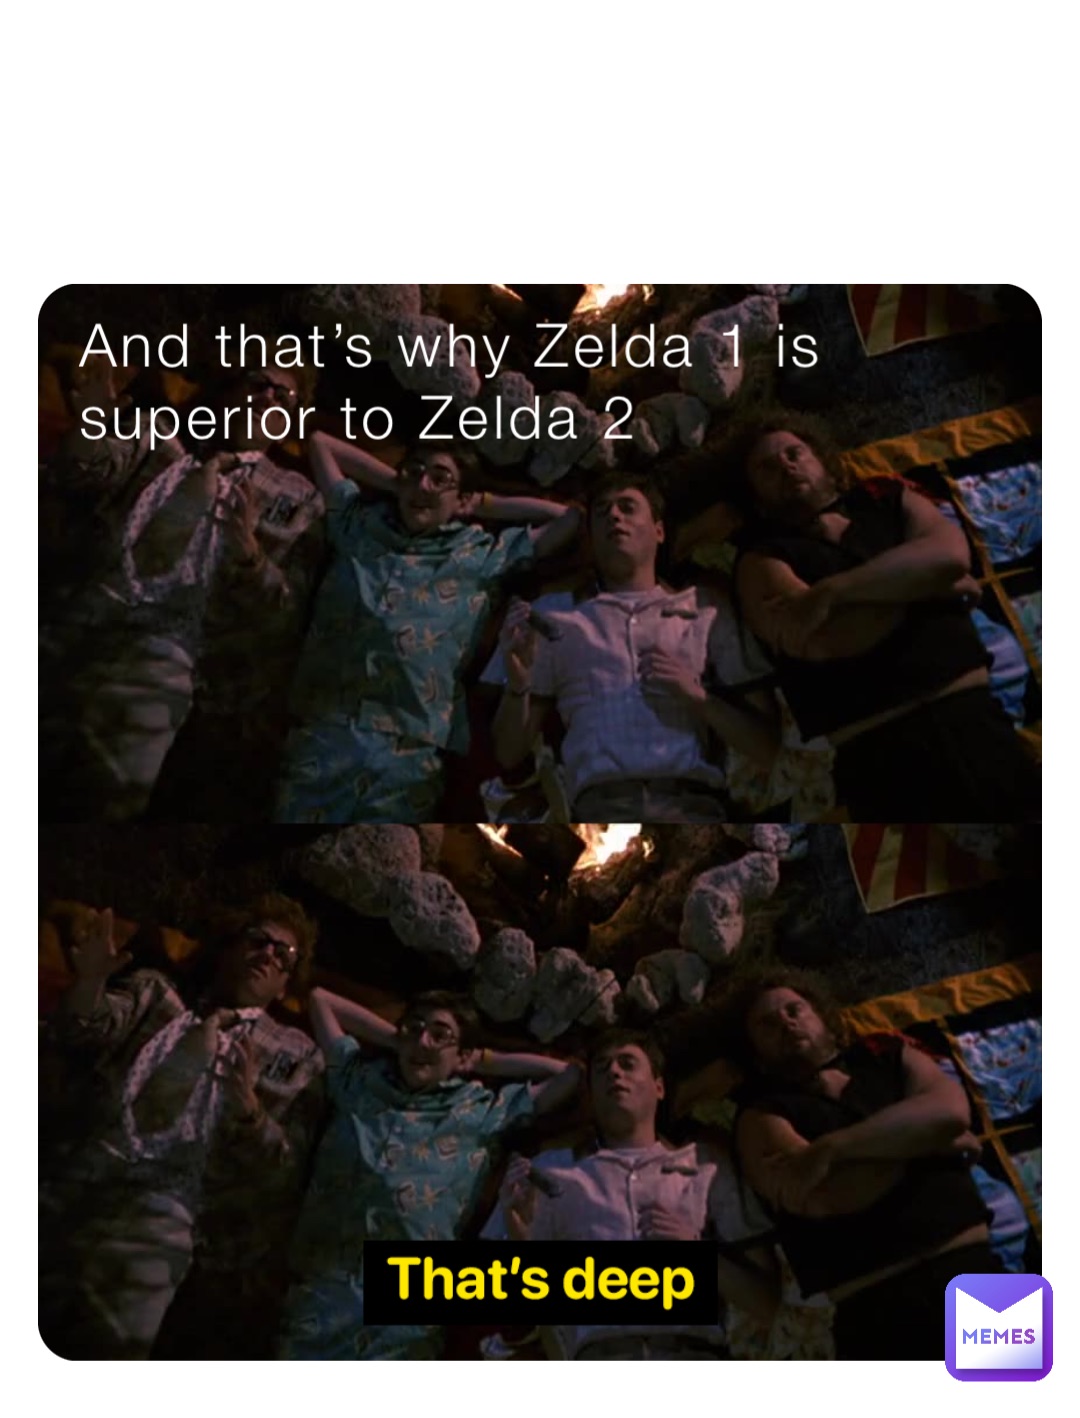 And that’s why Zelda 1 is superior to Zelda 2